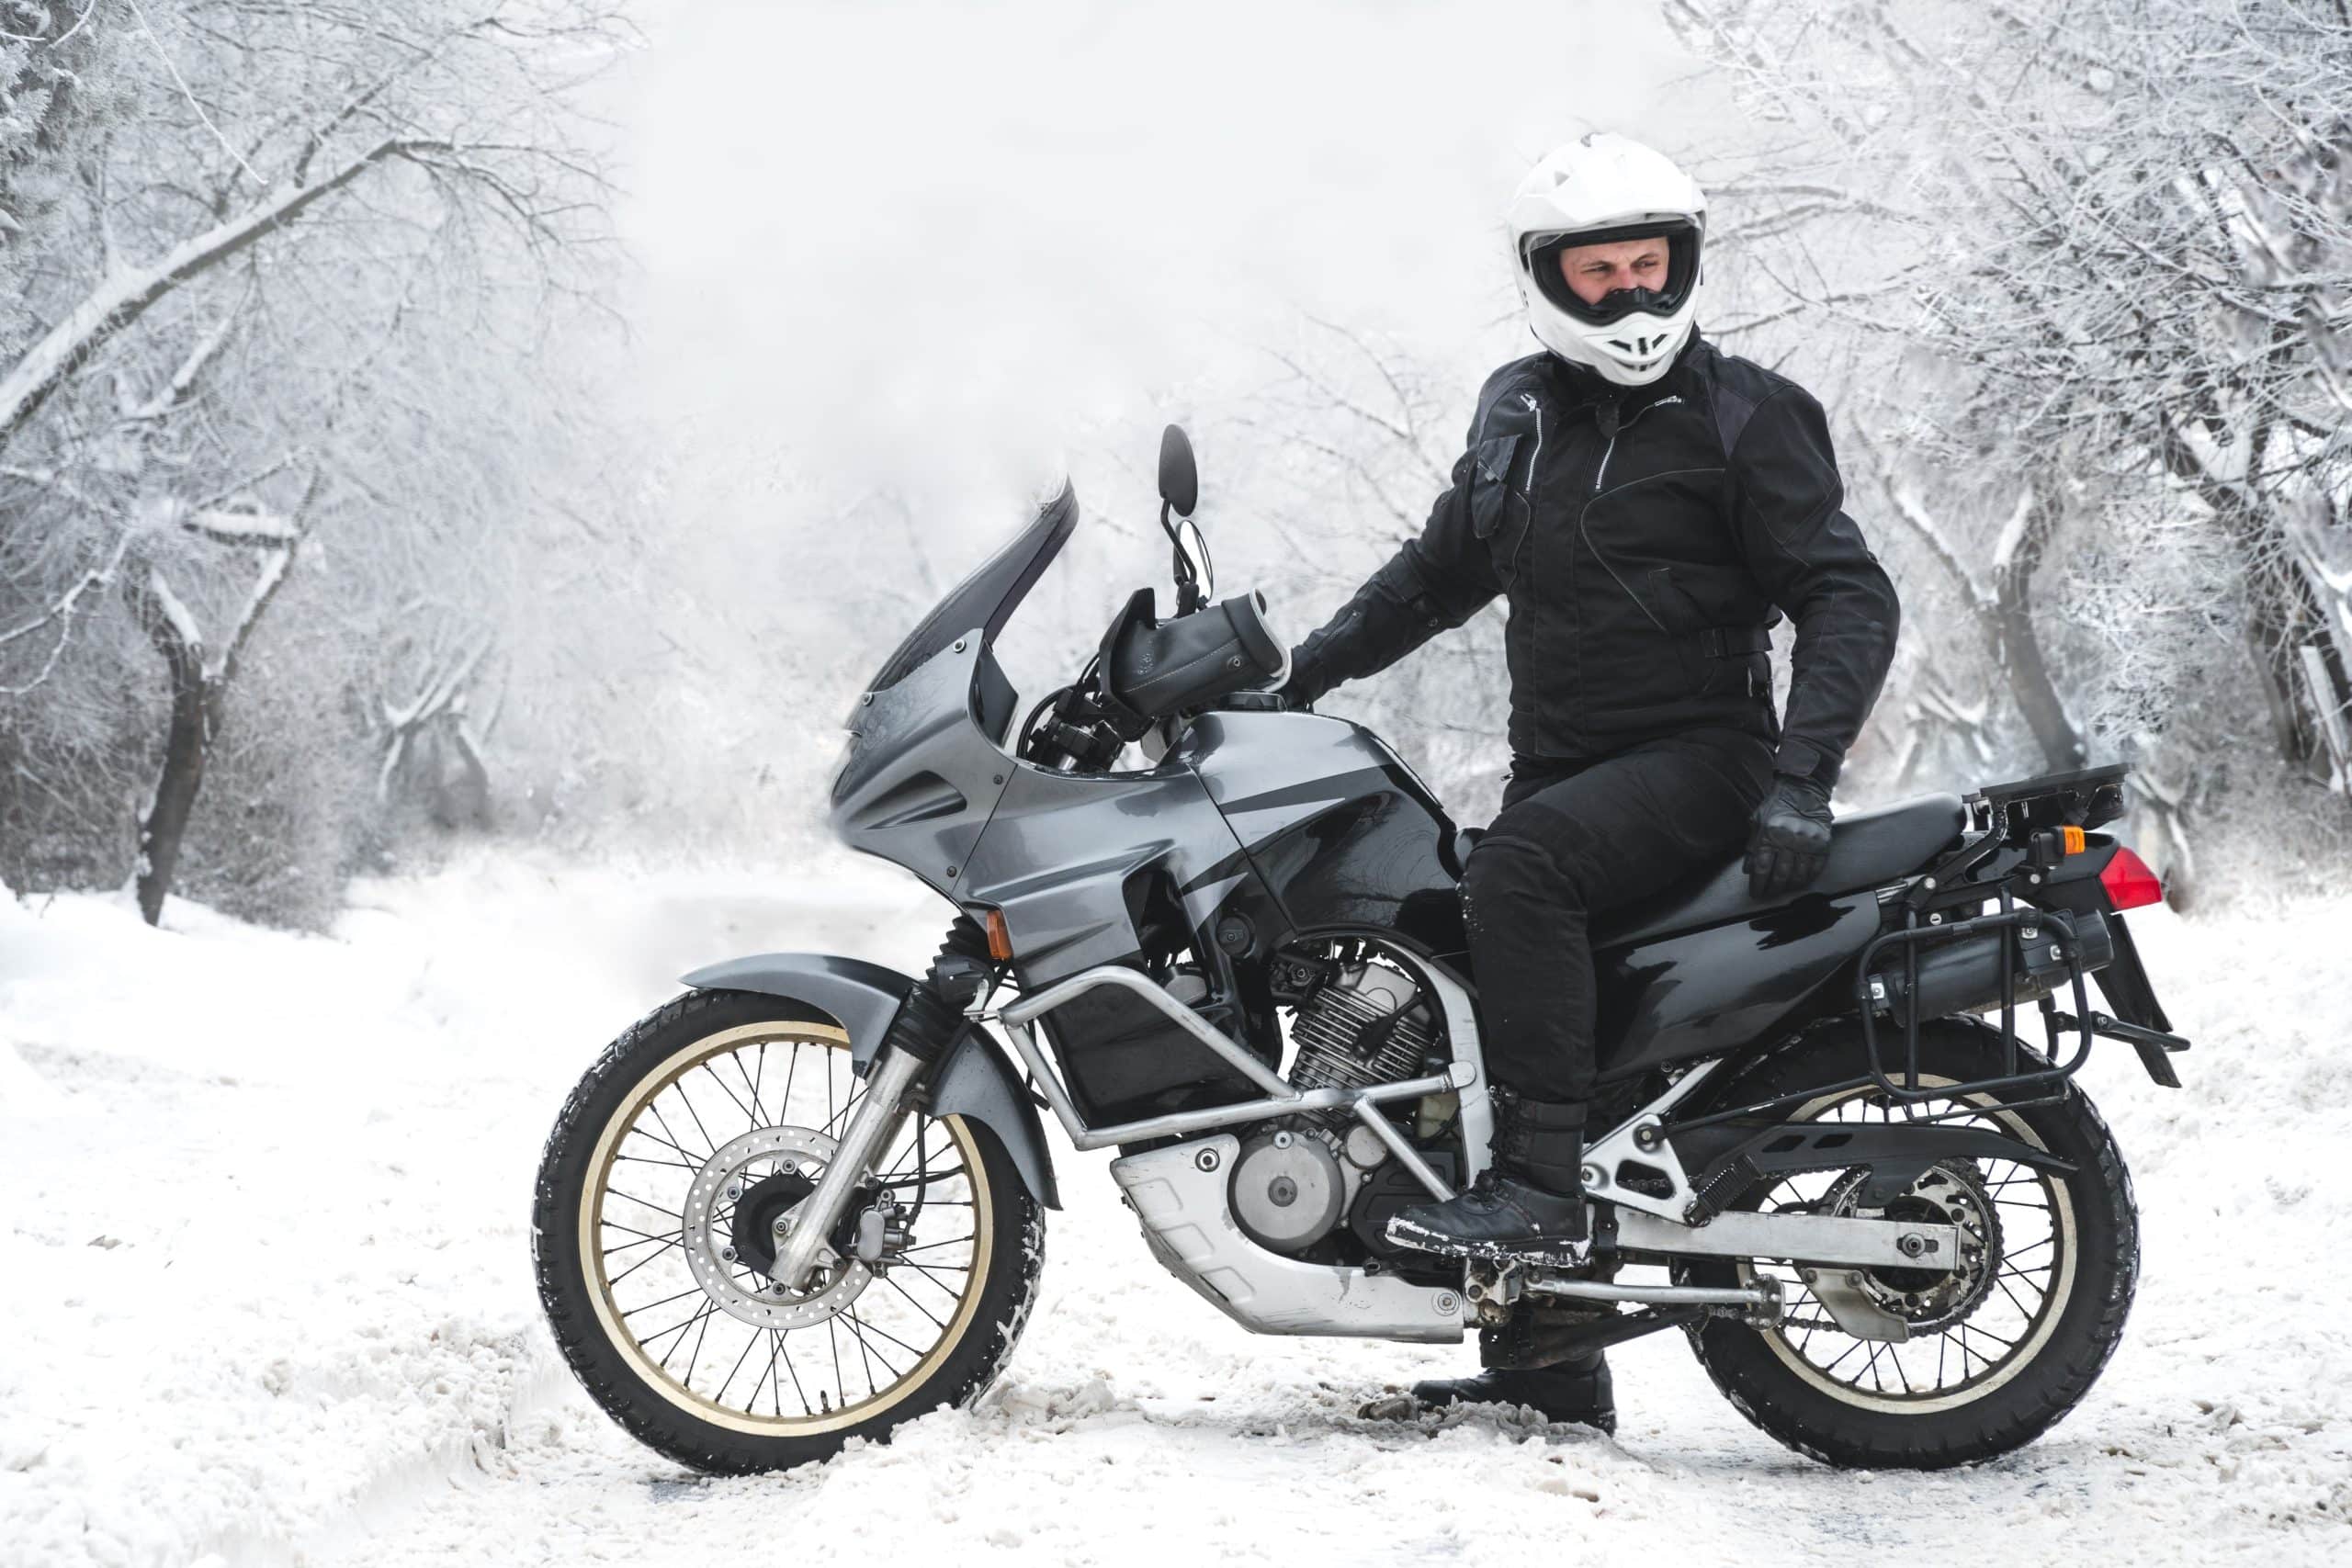 Essai hiver : Sous-vêtement anti-froid Mac Adam Windbear - Moto